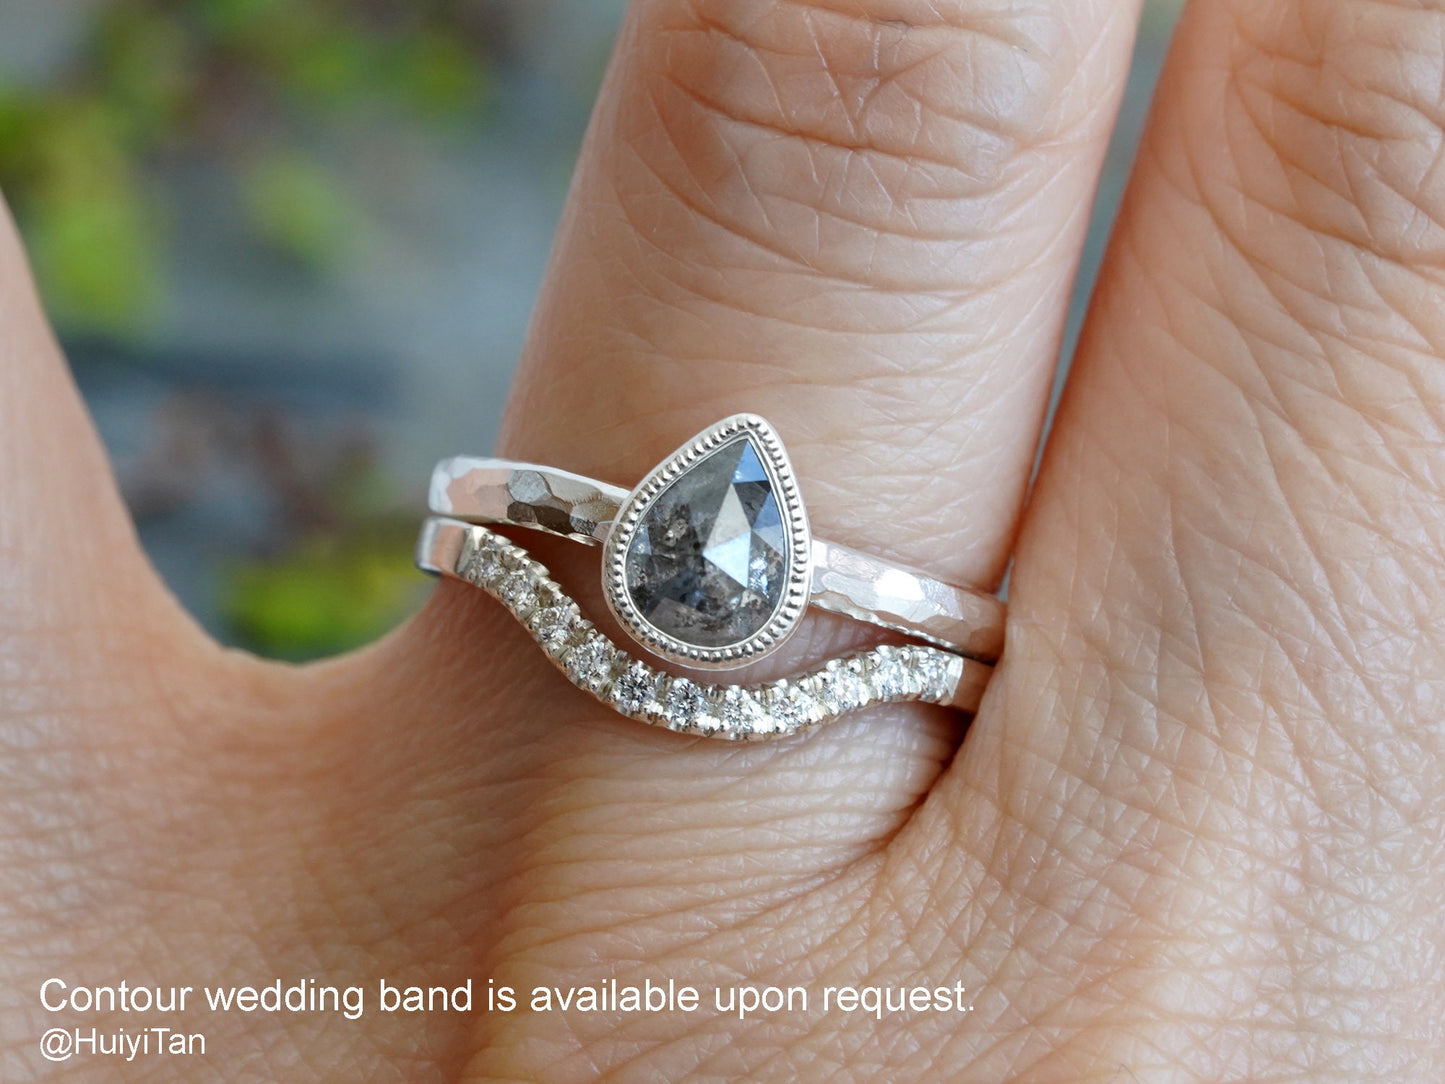 0.7ct Salt and Pepper Diamond Engagement Ring, Rose Cut Diamond Engagement Ring, Small Diamond Ring